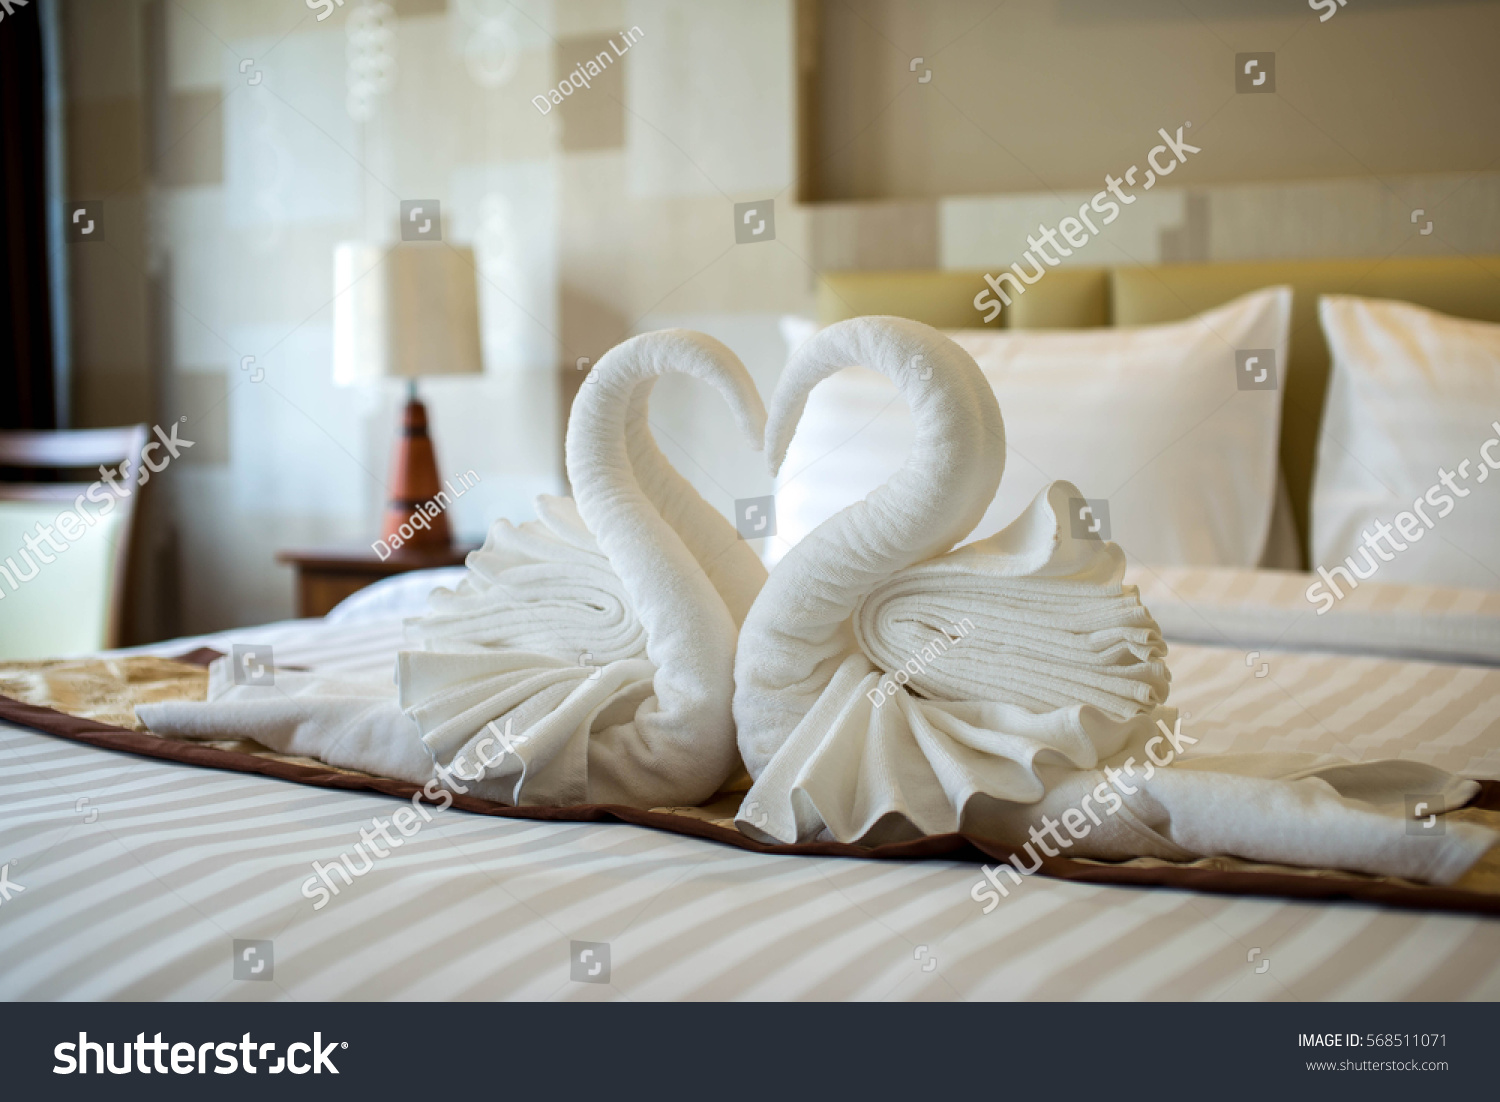 Полотенце на кровати. Лебеди из полотенец в отеле. Фигурки из полотенец в отелях. Лебеди на кровати из полотенцев. Полотенца на кровати в гостинице.